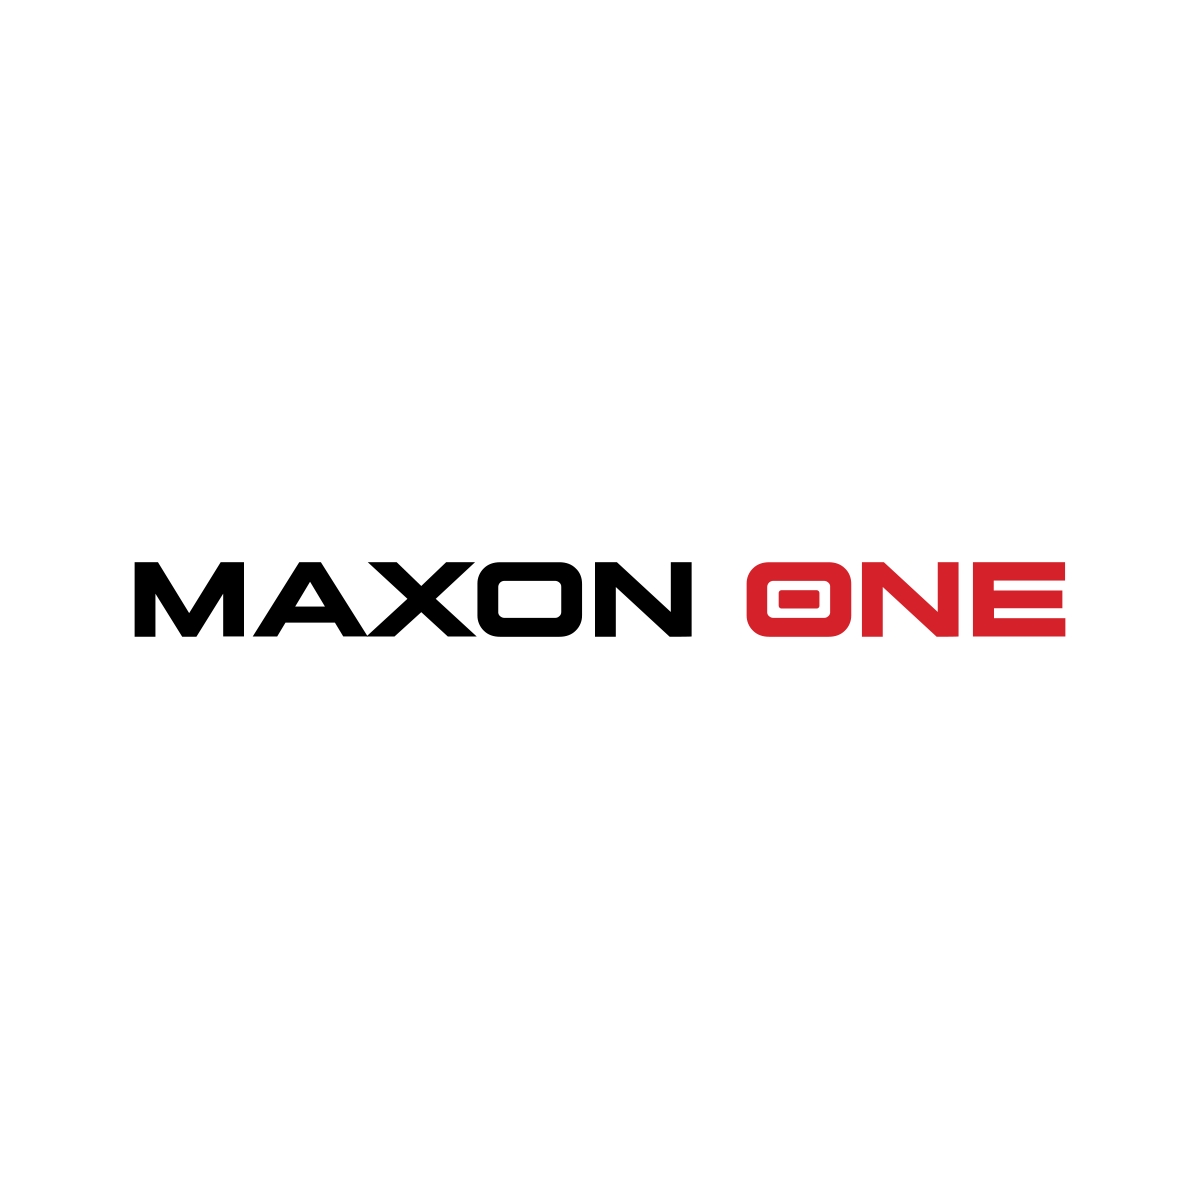 Maxon One